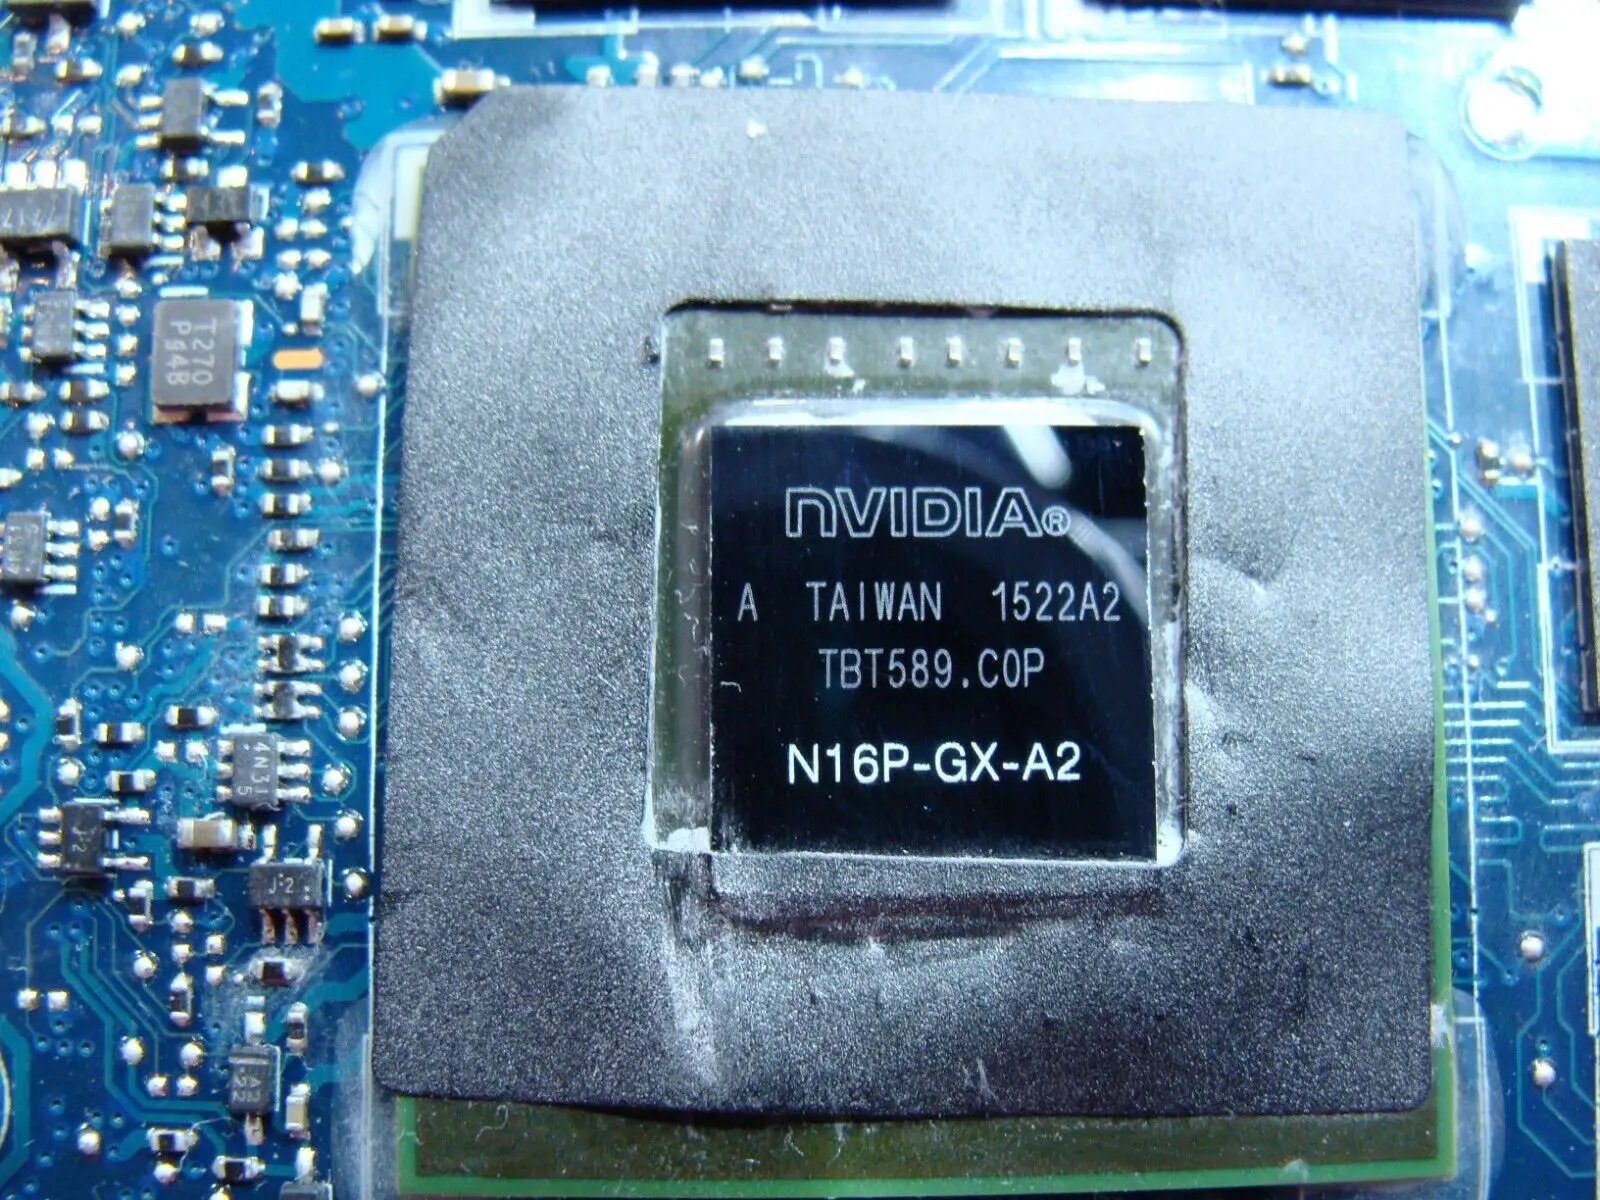 Asus ROG G501J i7-4750HQ 2.0GHz 4GB GTX960M 4GB Motherboard 60NB0870-MB4600